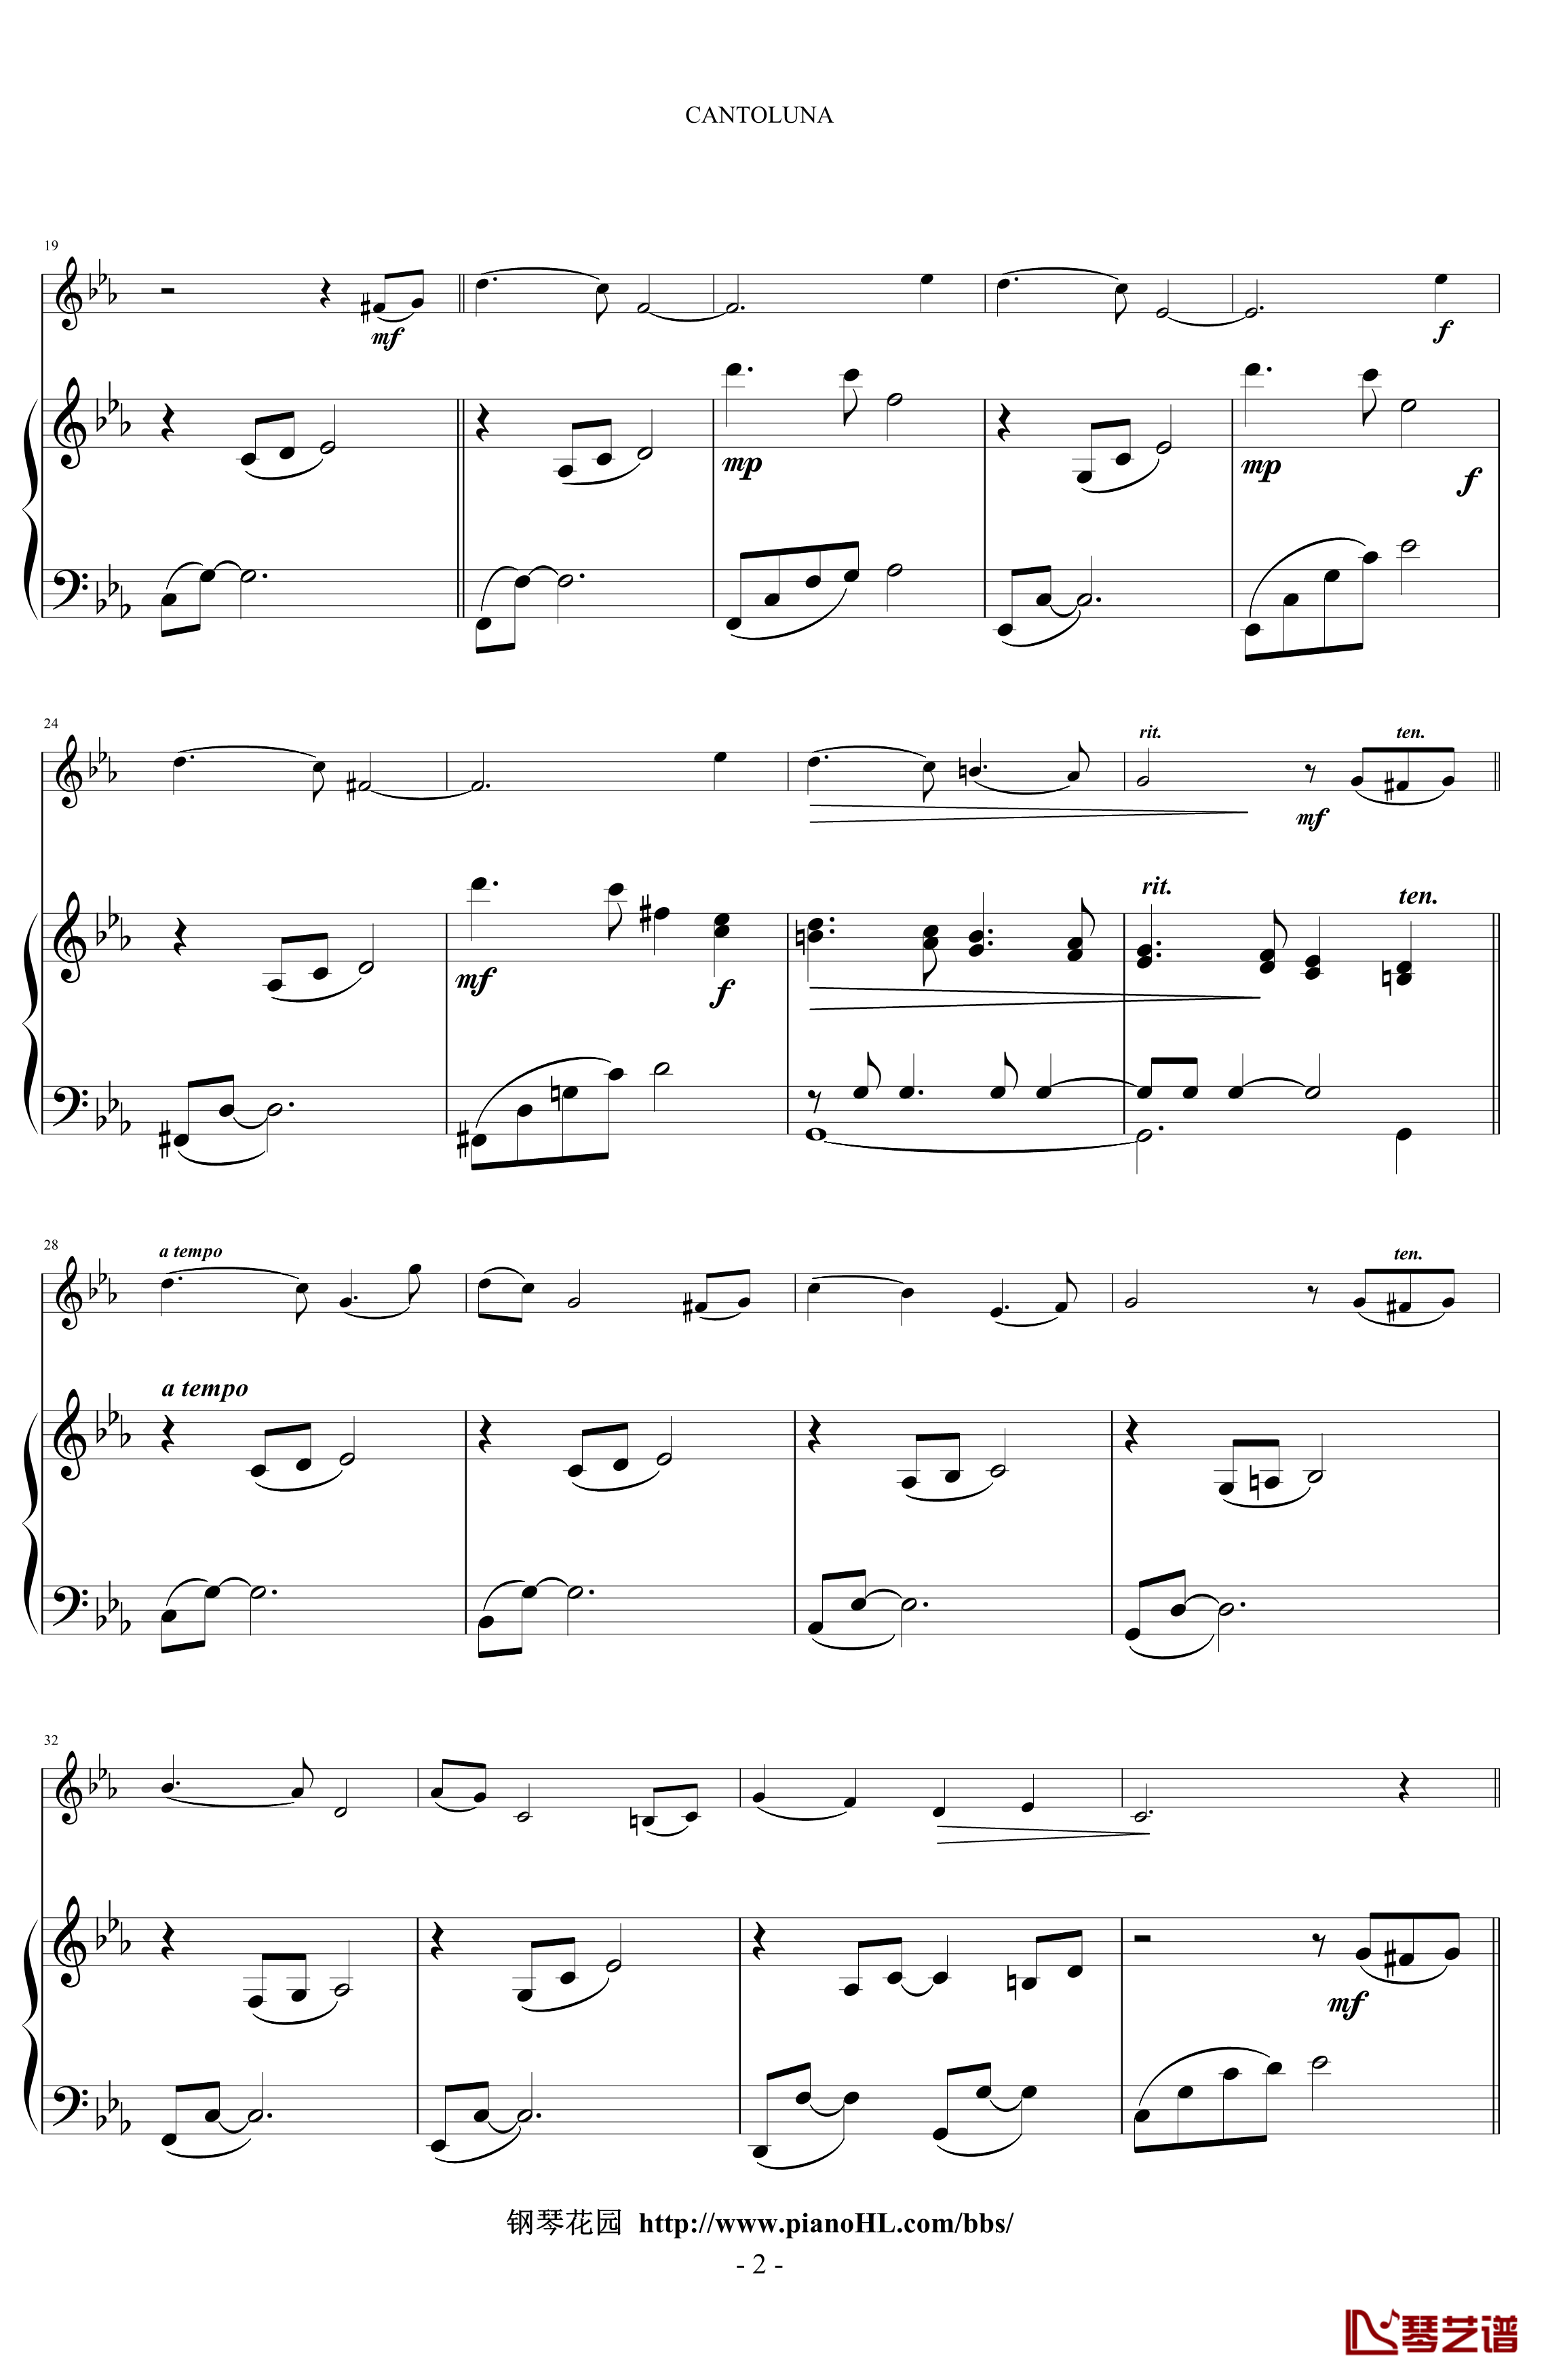 Cantoluna钢琴谱-神秘园乐队2